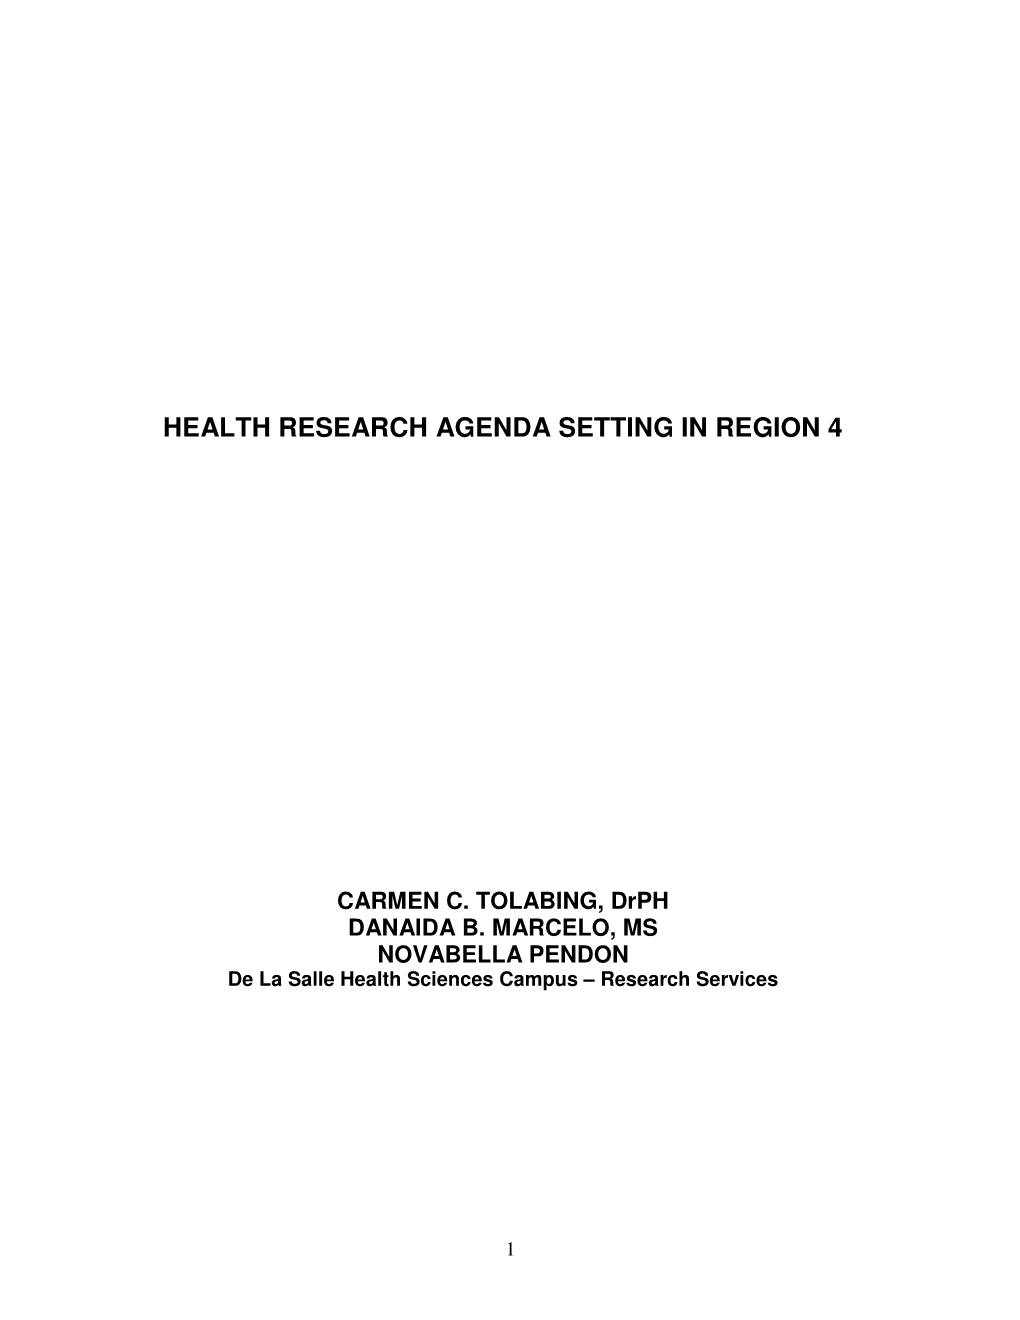 Health Research Agenda Setting in Region 4